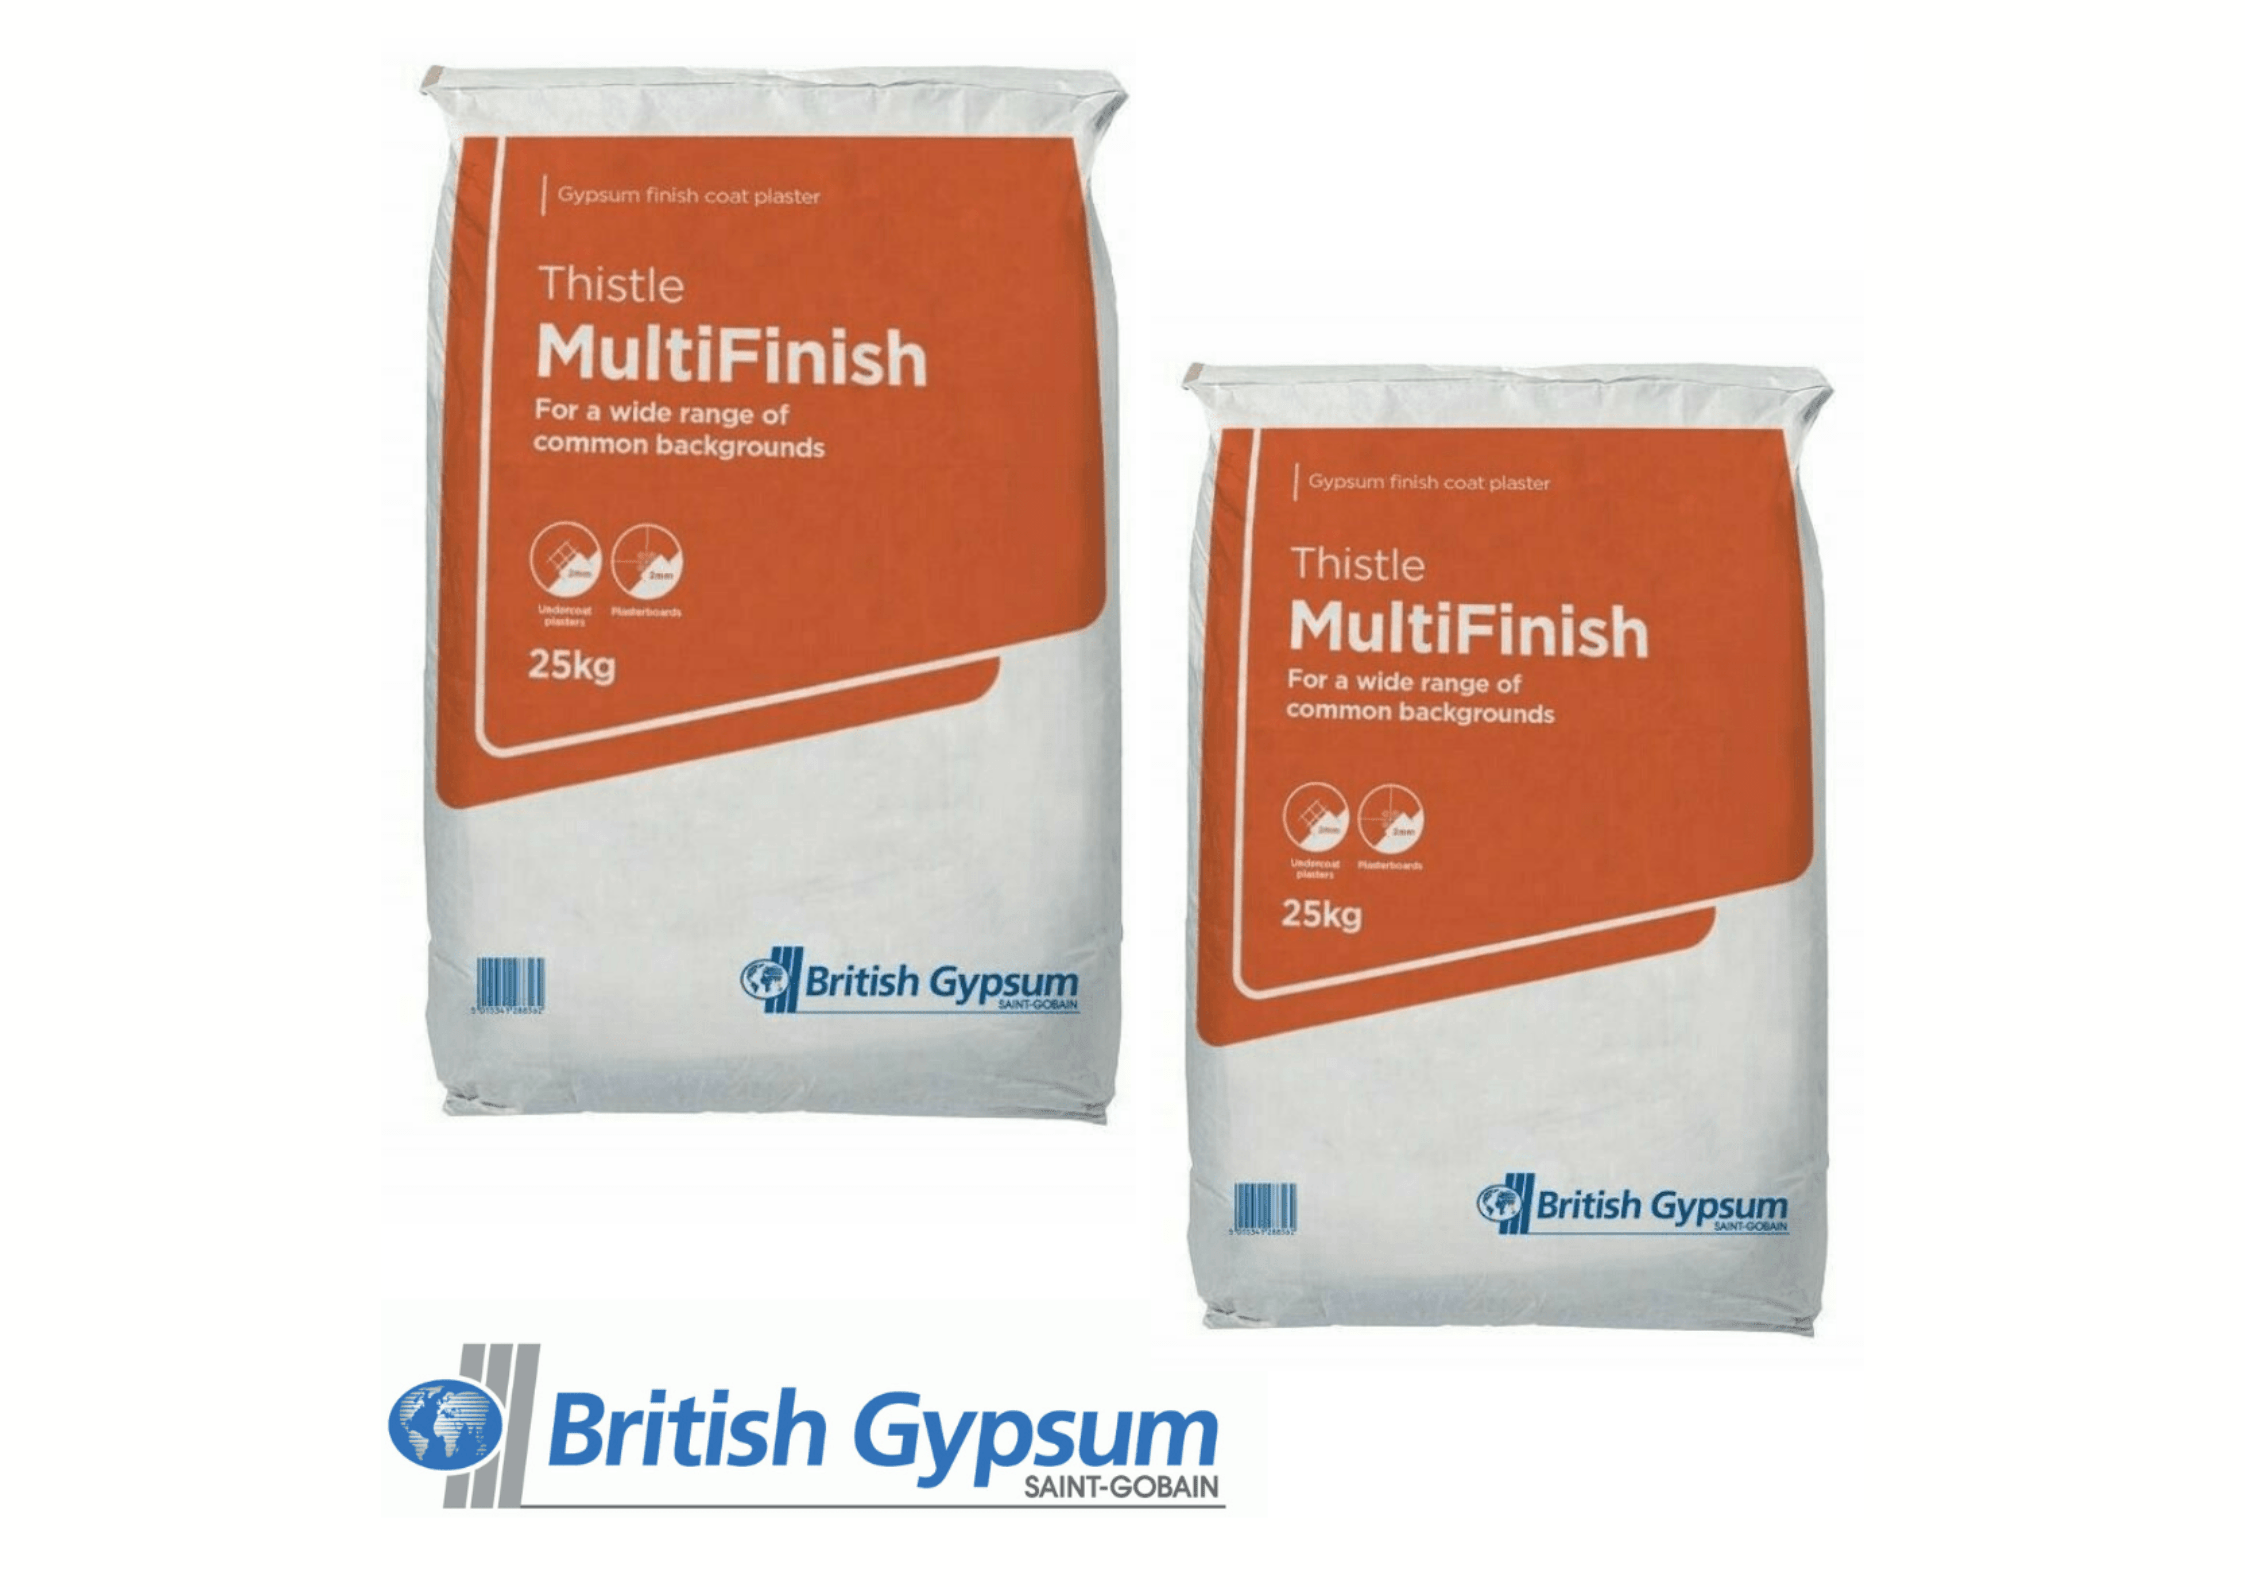 British Gypsum 25kg Bag Multi Finish Plaster - Thistle 25kg IUK01248 Multi Finish Plaster - Thistle 25kg | insulationuk.co.uk